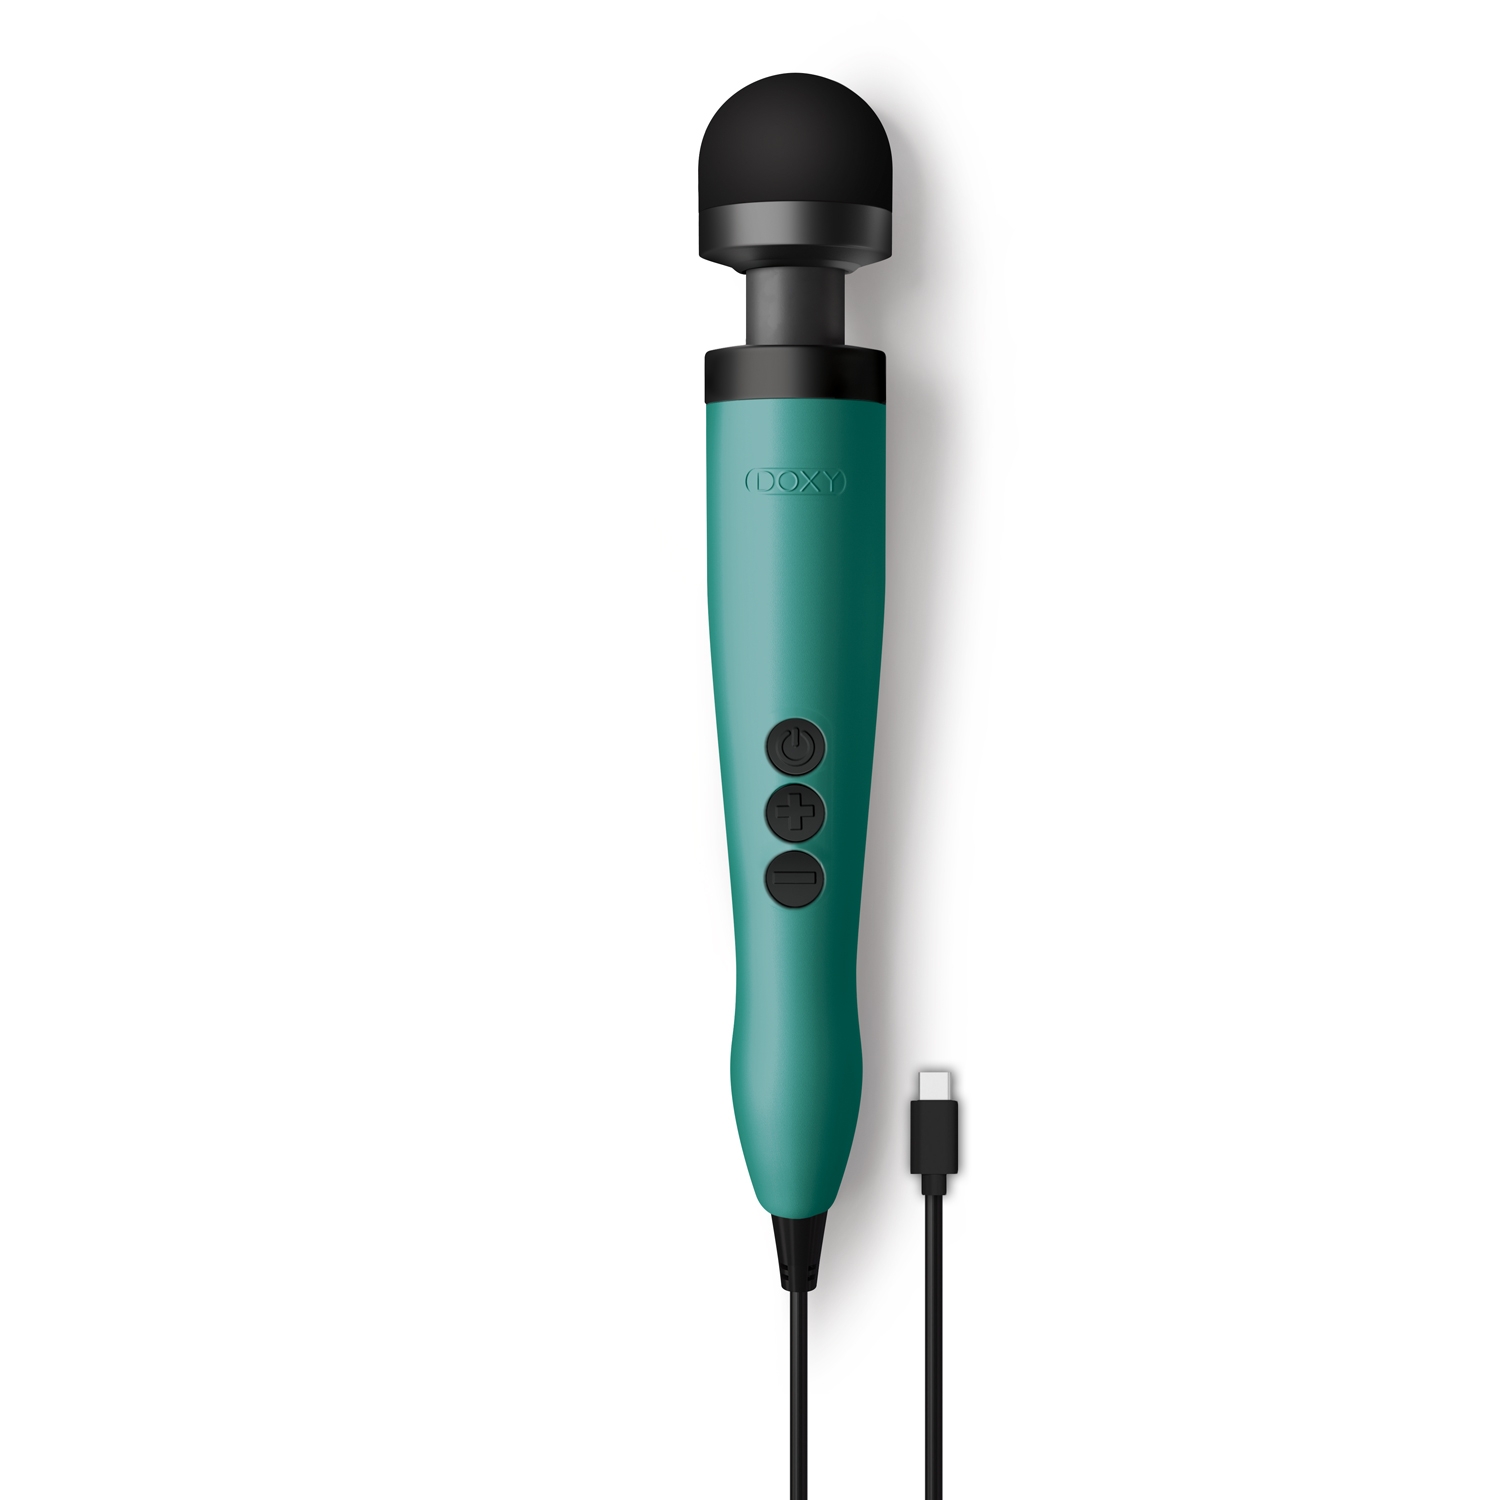 Doxy 3 USB-C Magic Wand - Turquoise